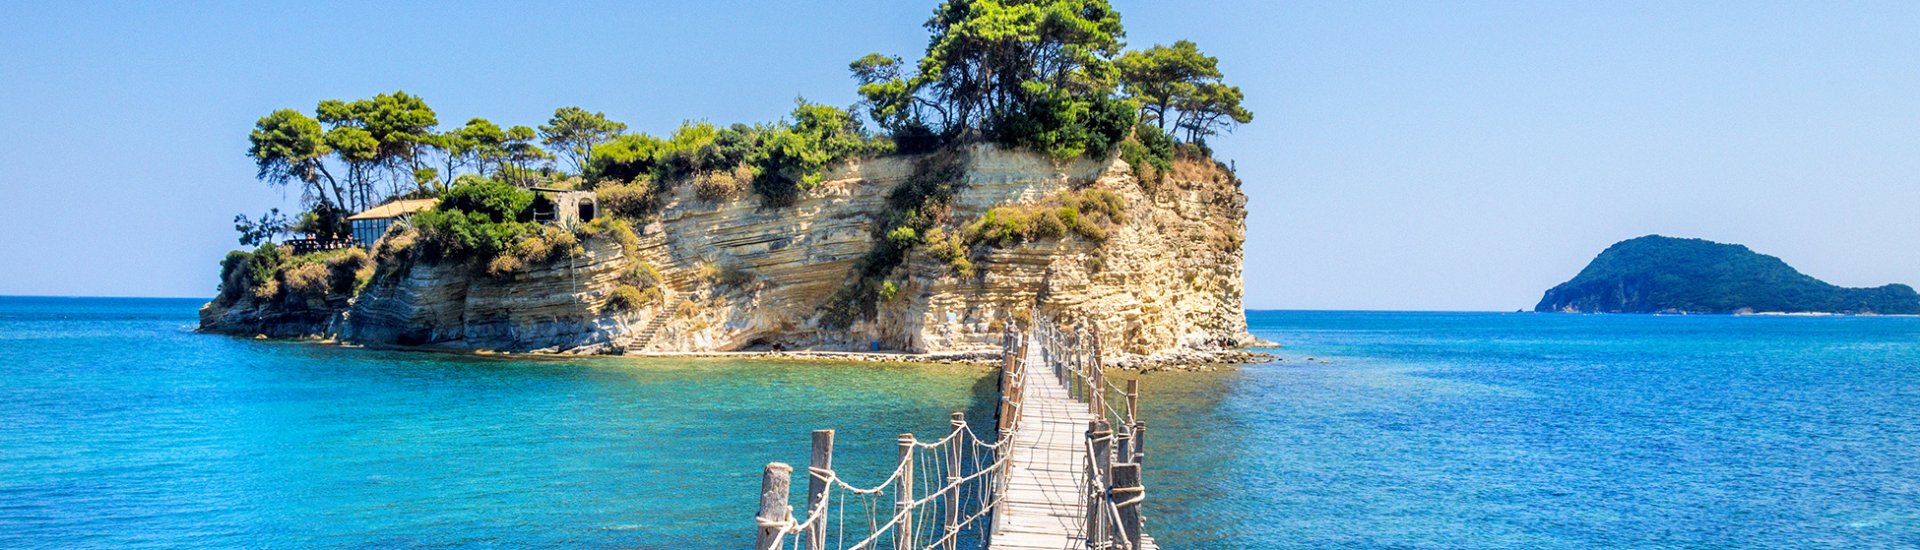 Island-Greece